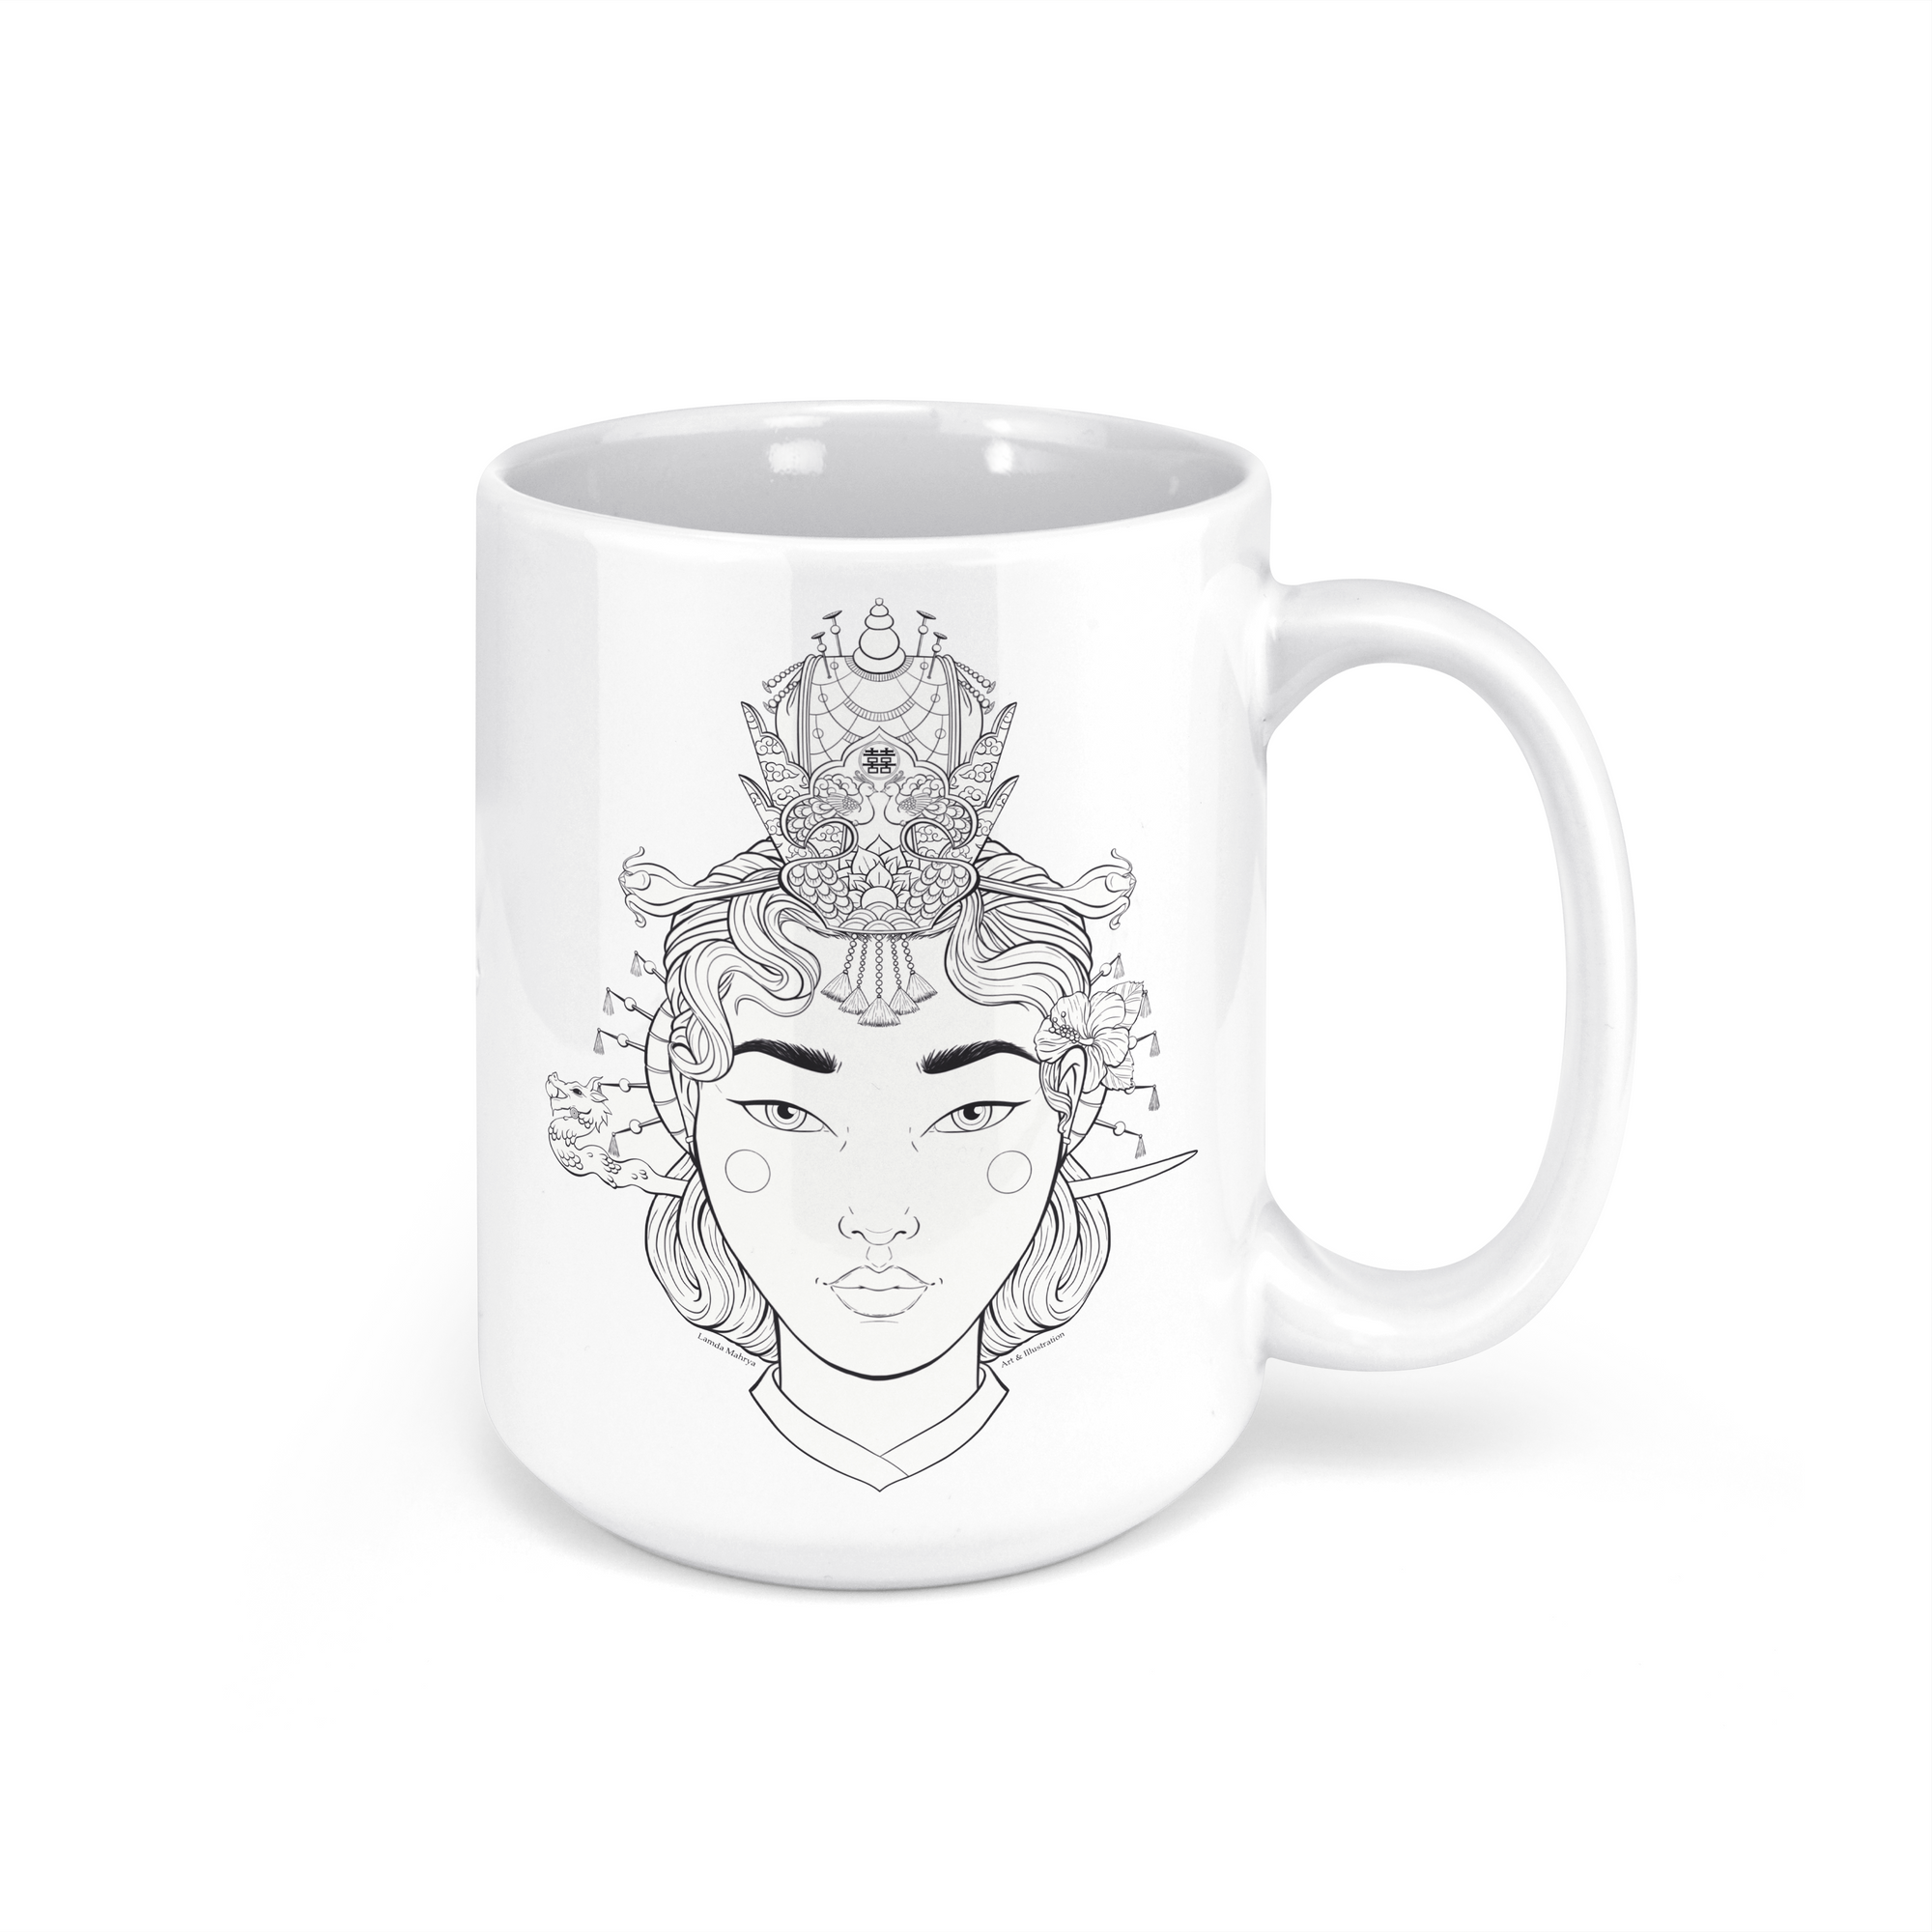 "Hibiscus Bride" - 15oz Coffee Mug